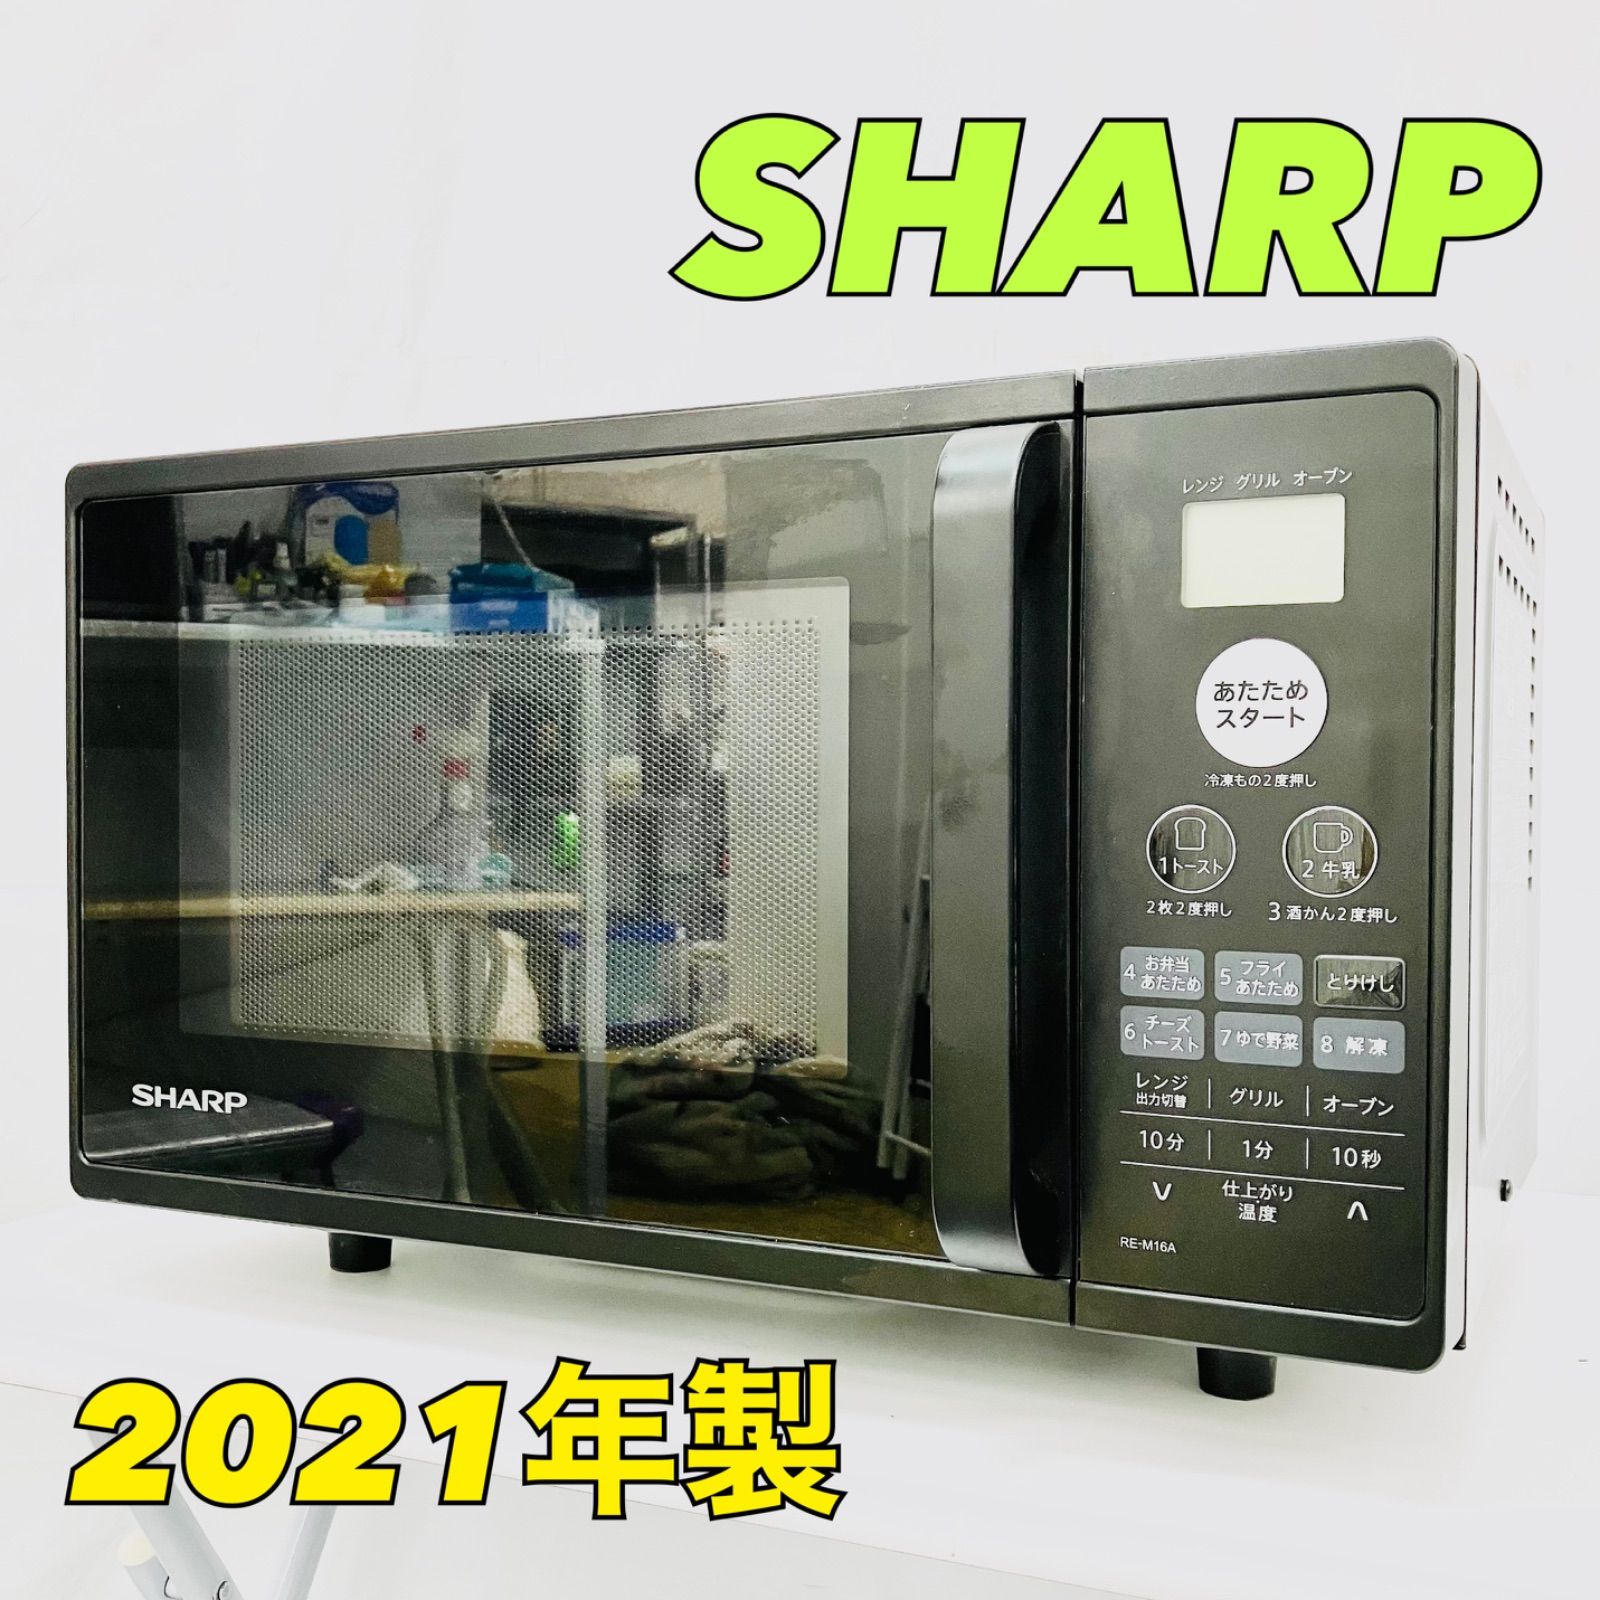 SHARP シャープ オーブンレンジ RE-S50B-W 横開き - 電子レンジ/オーブン